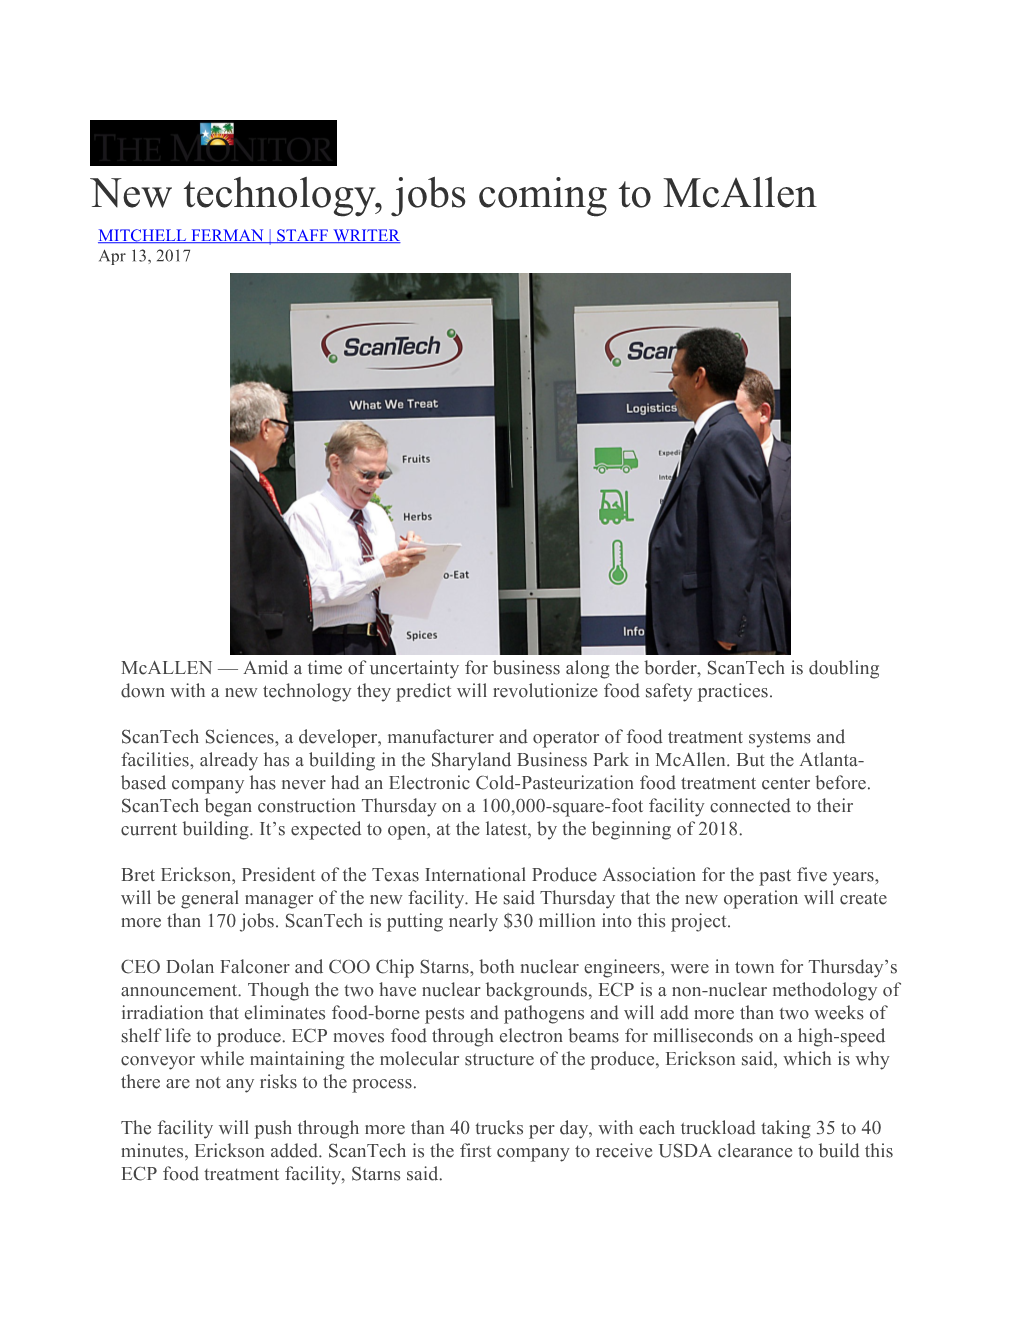 New Technology, Jobs Coming to Mcallen